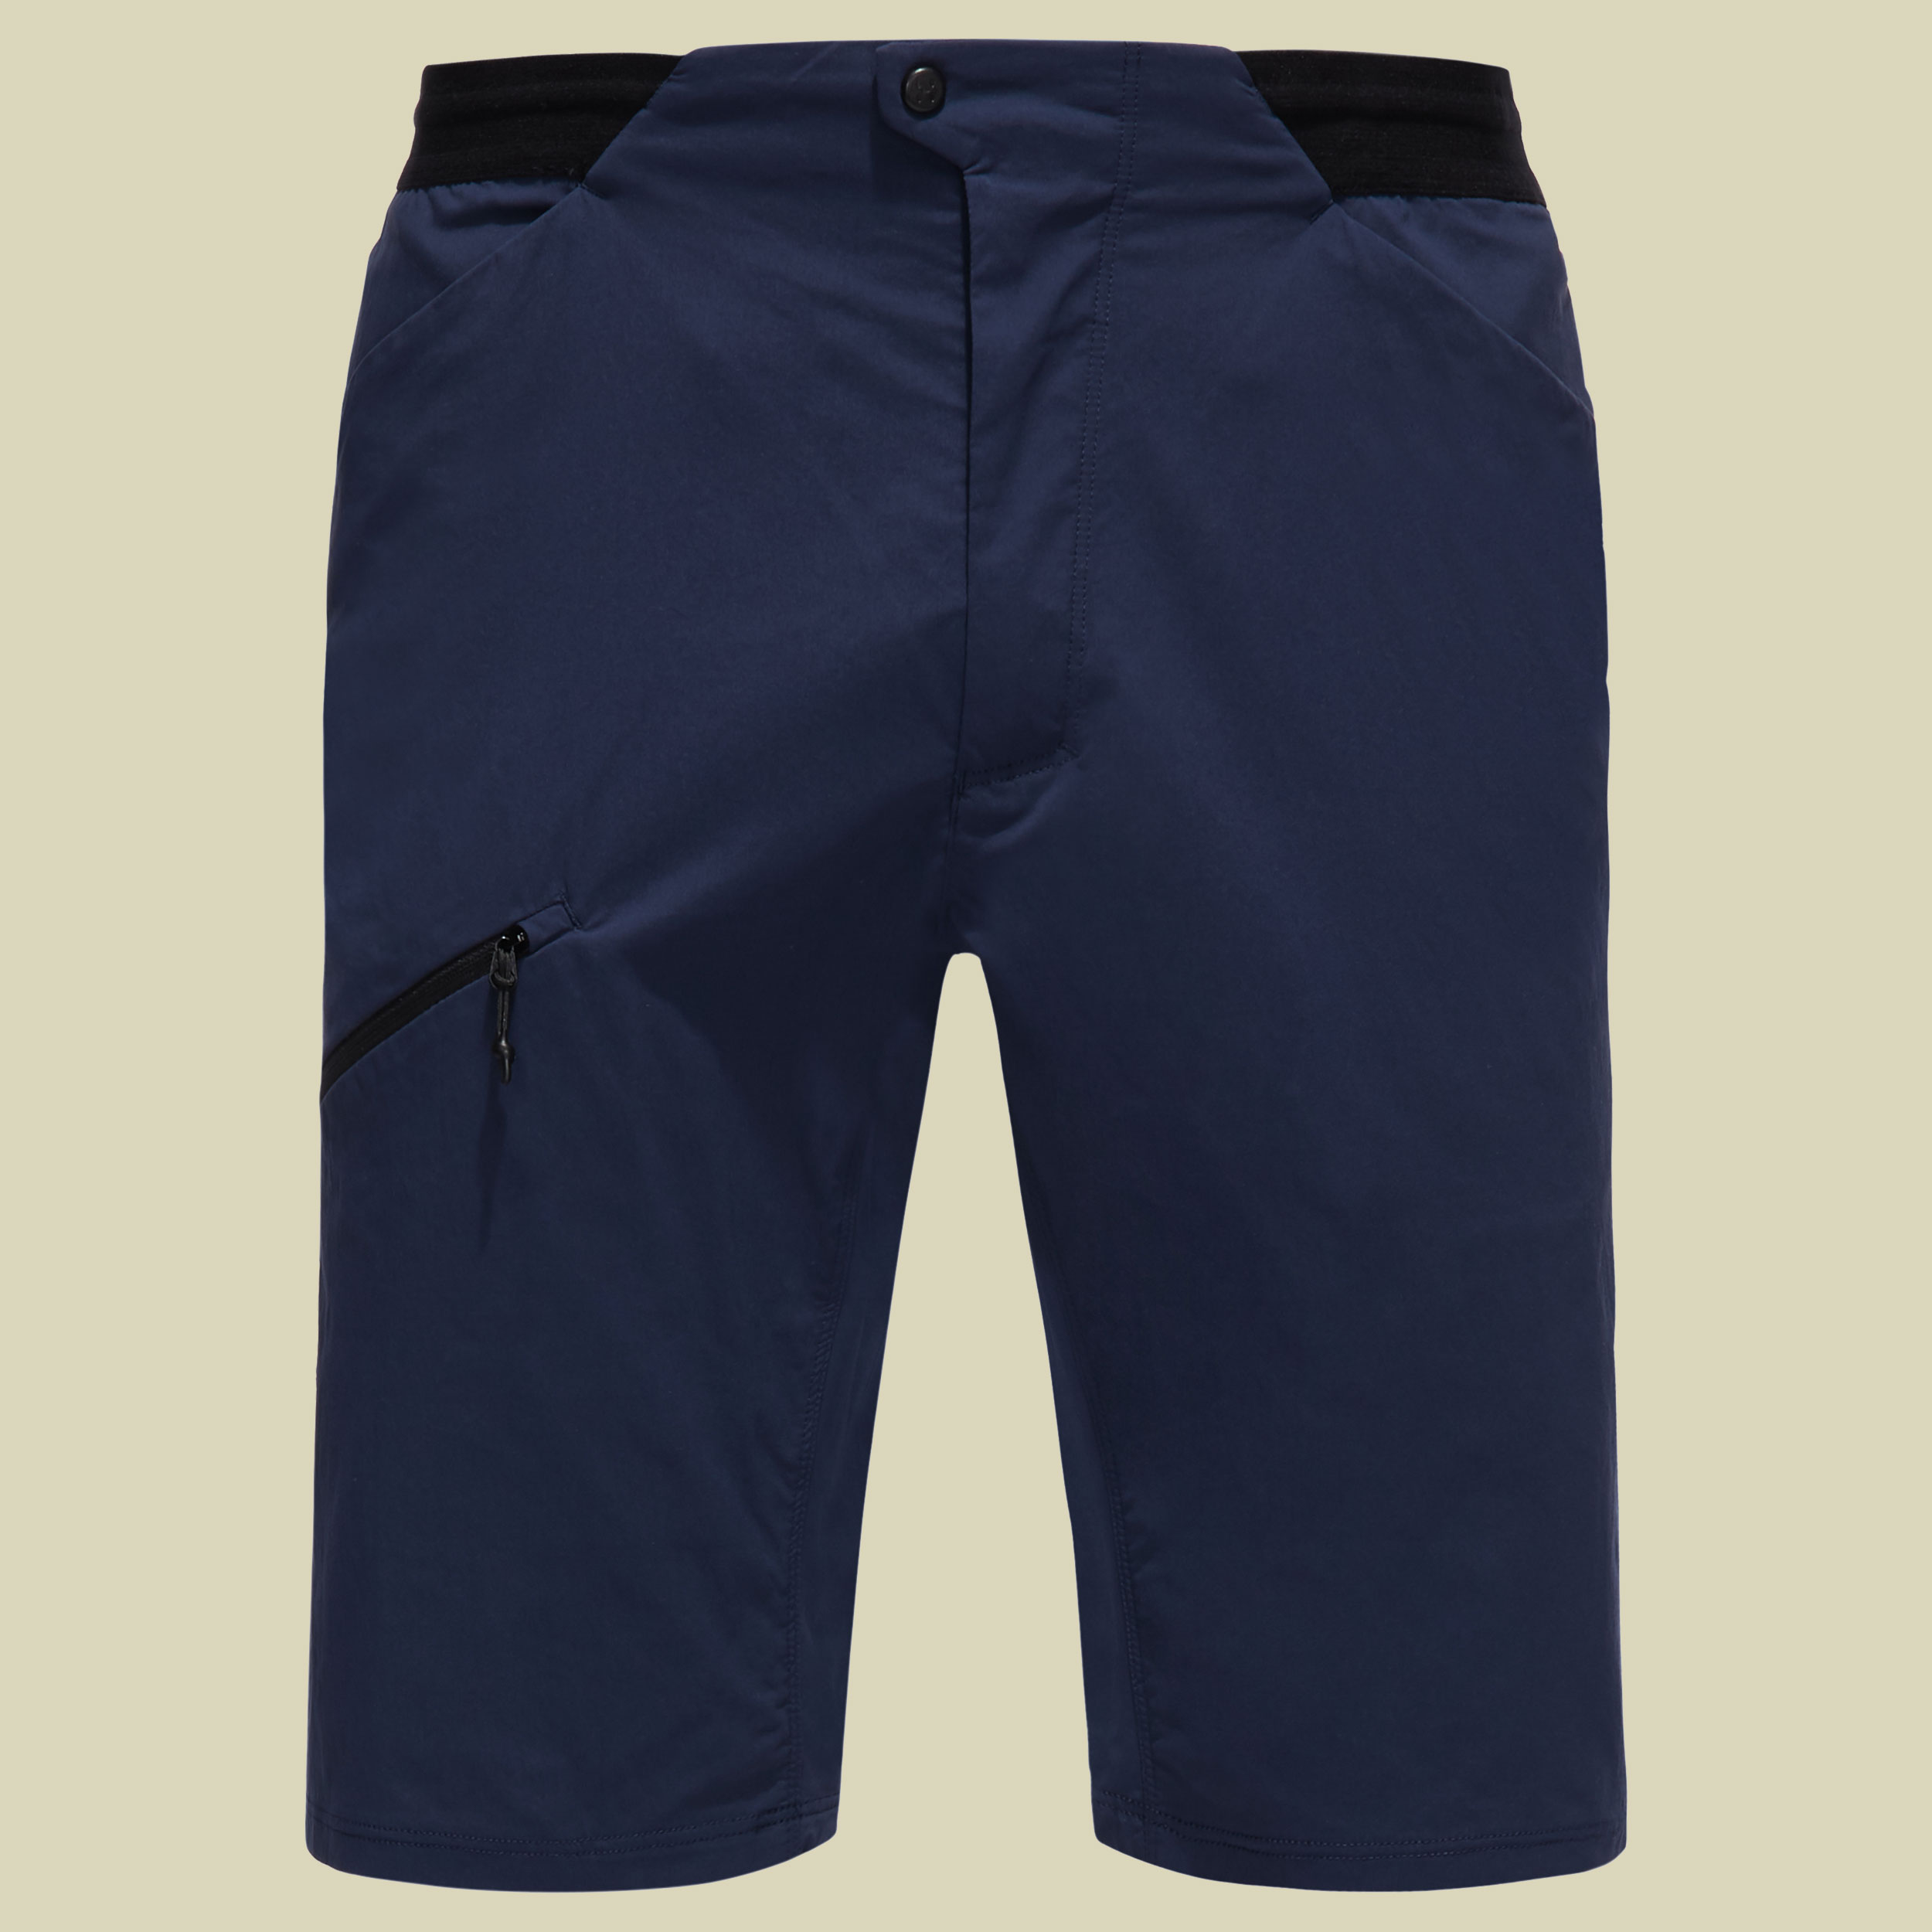 L.I.M. Fuse Shorts Men 50 blau - tarn blue